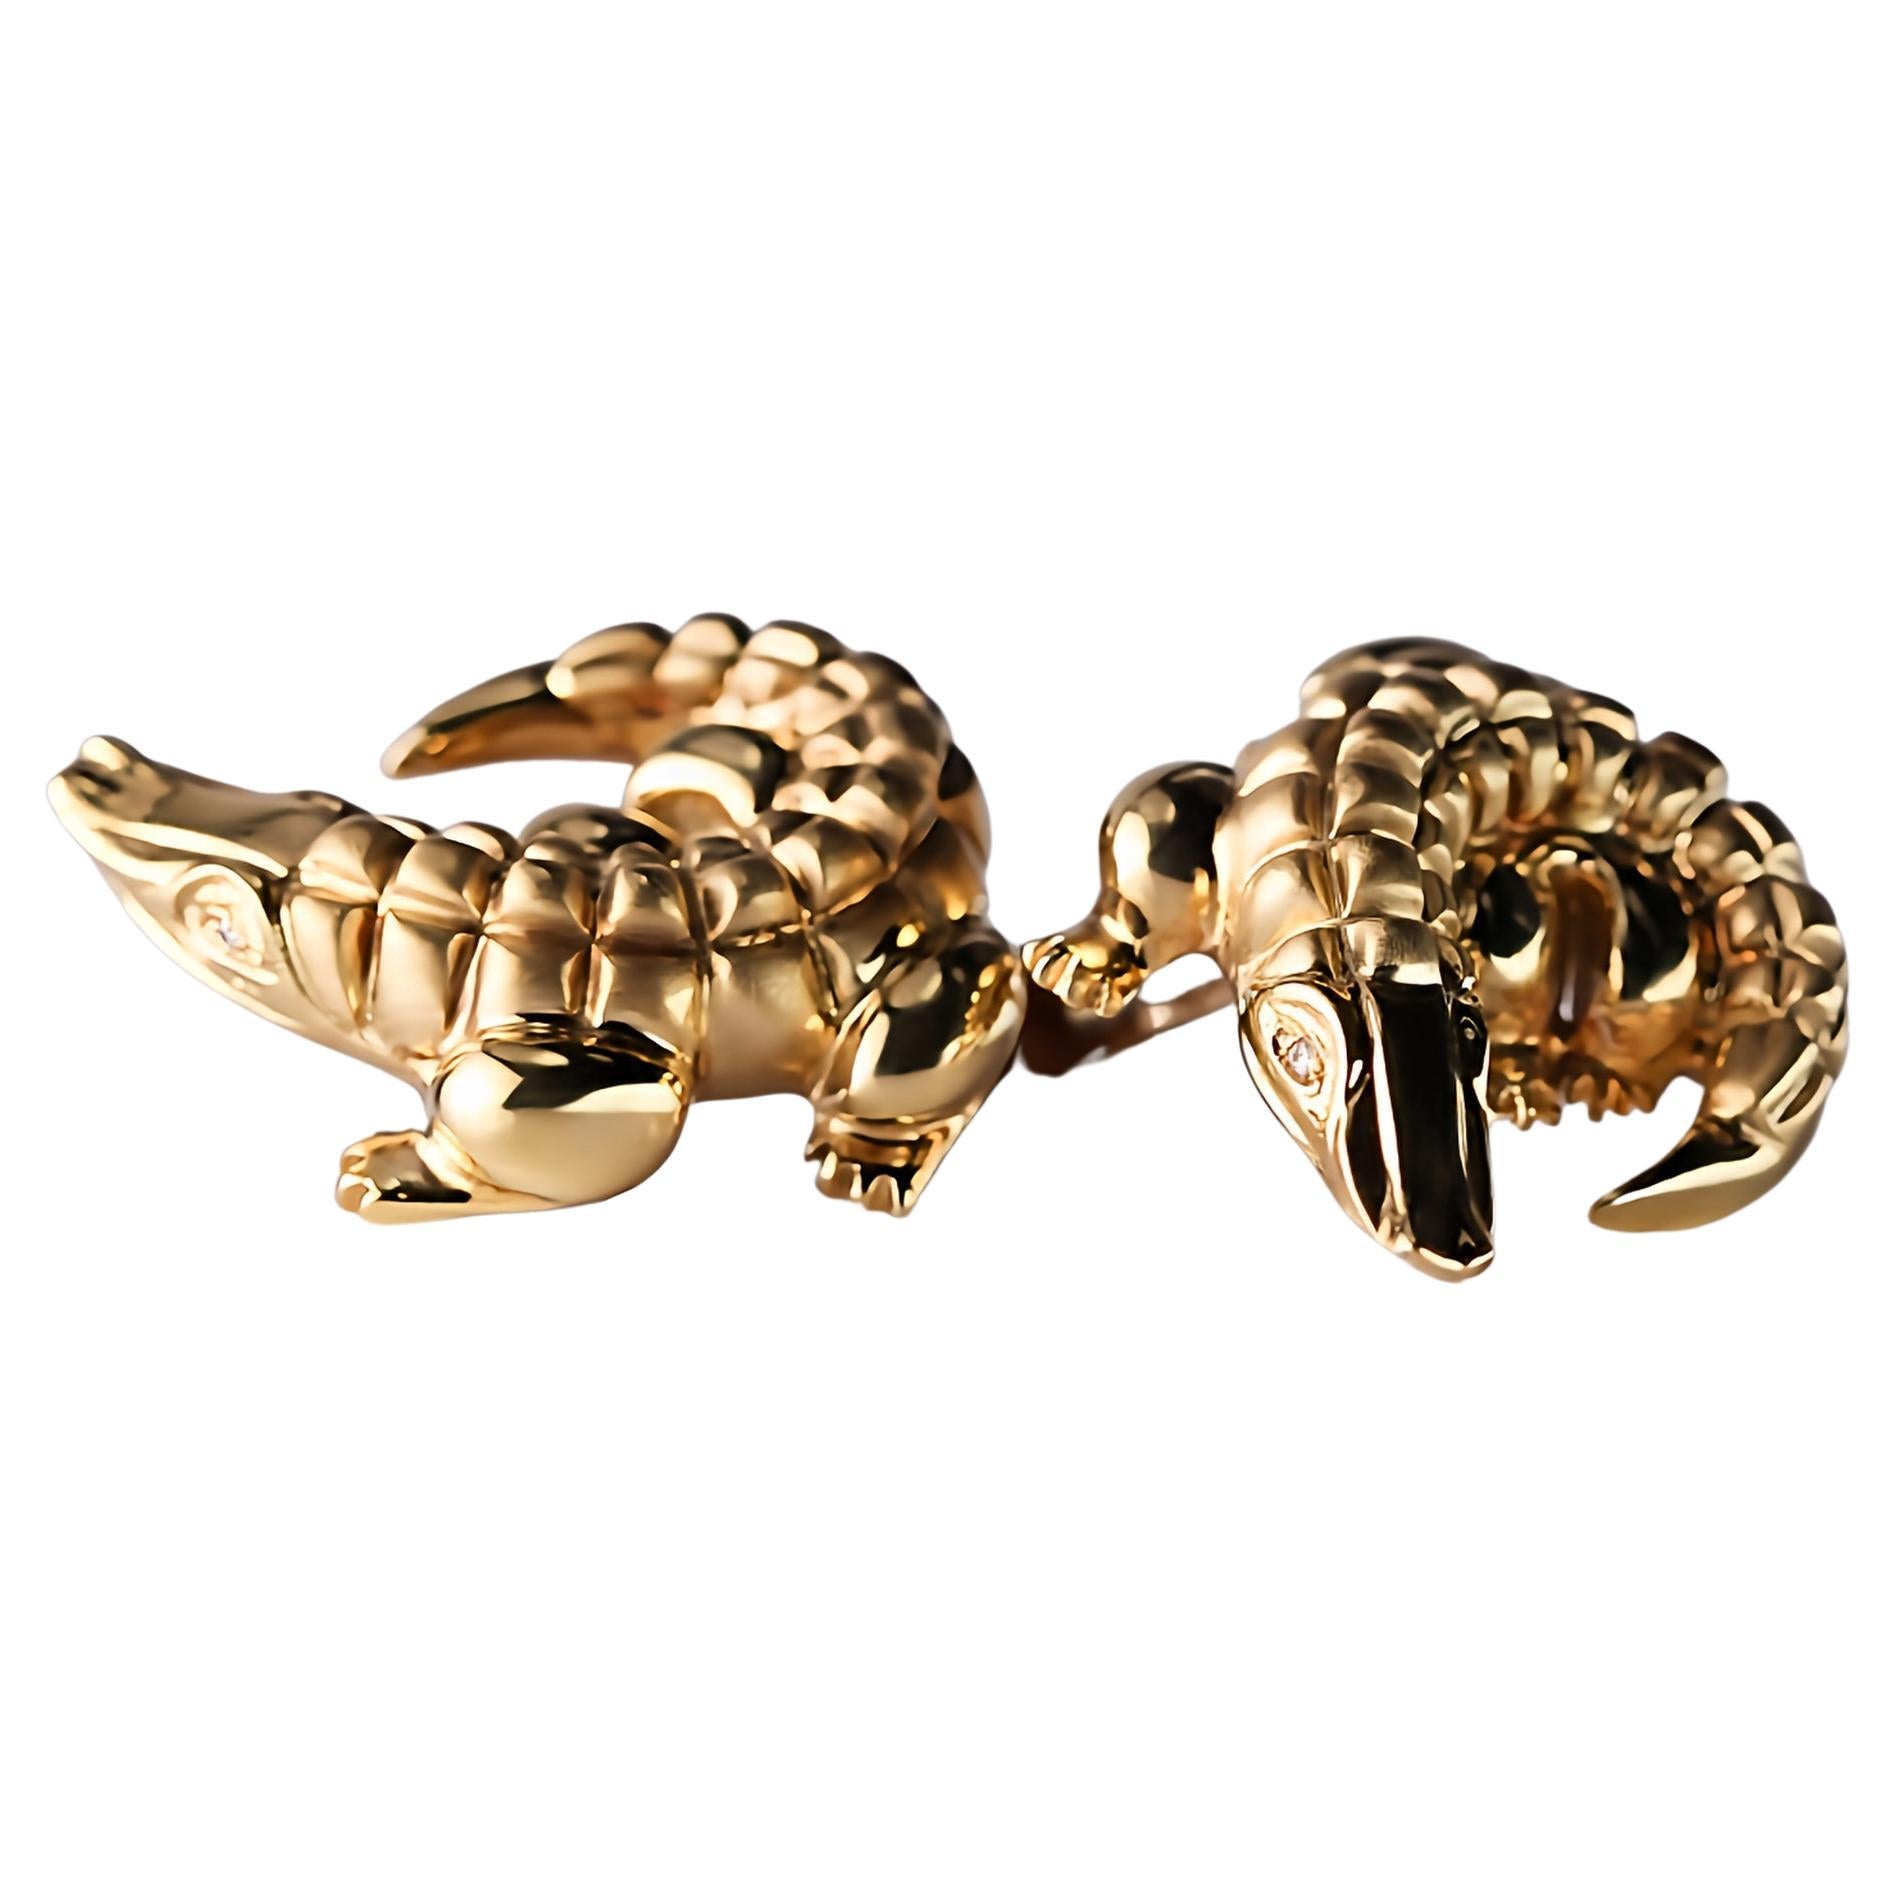 Charming 18 Karat Yellow Gold Crocodile Cufflinks with Diamond Eyes